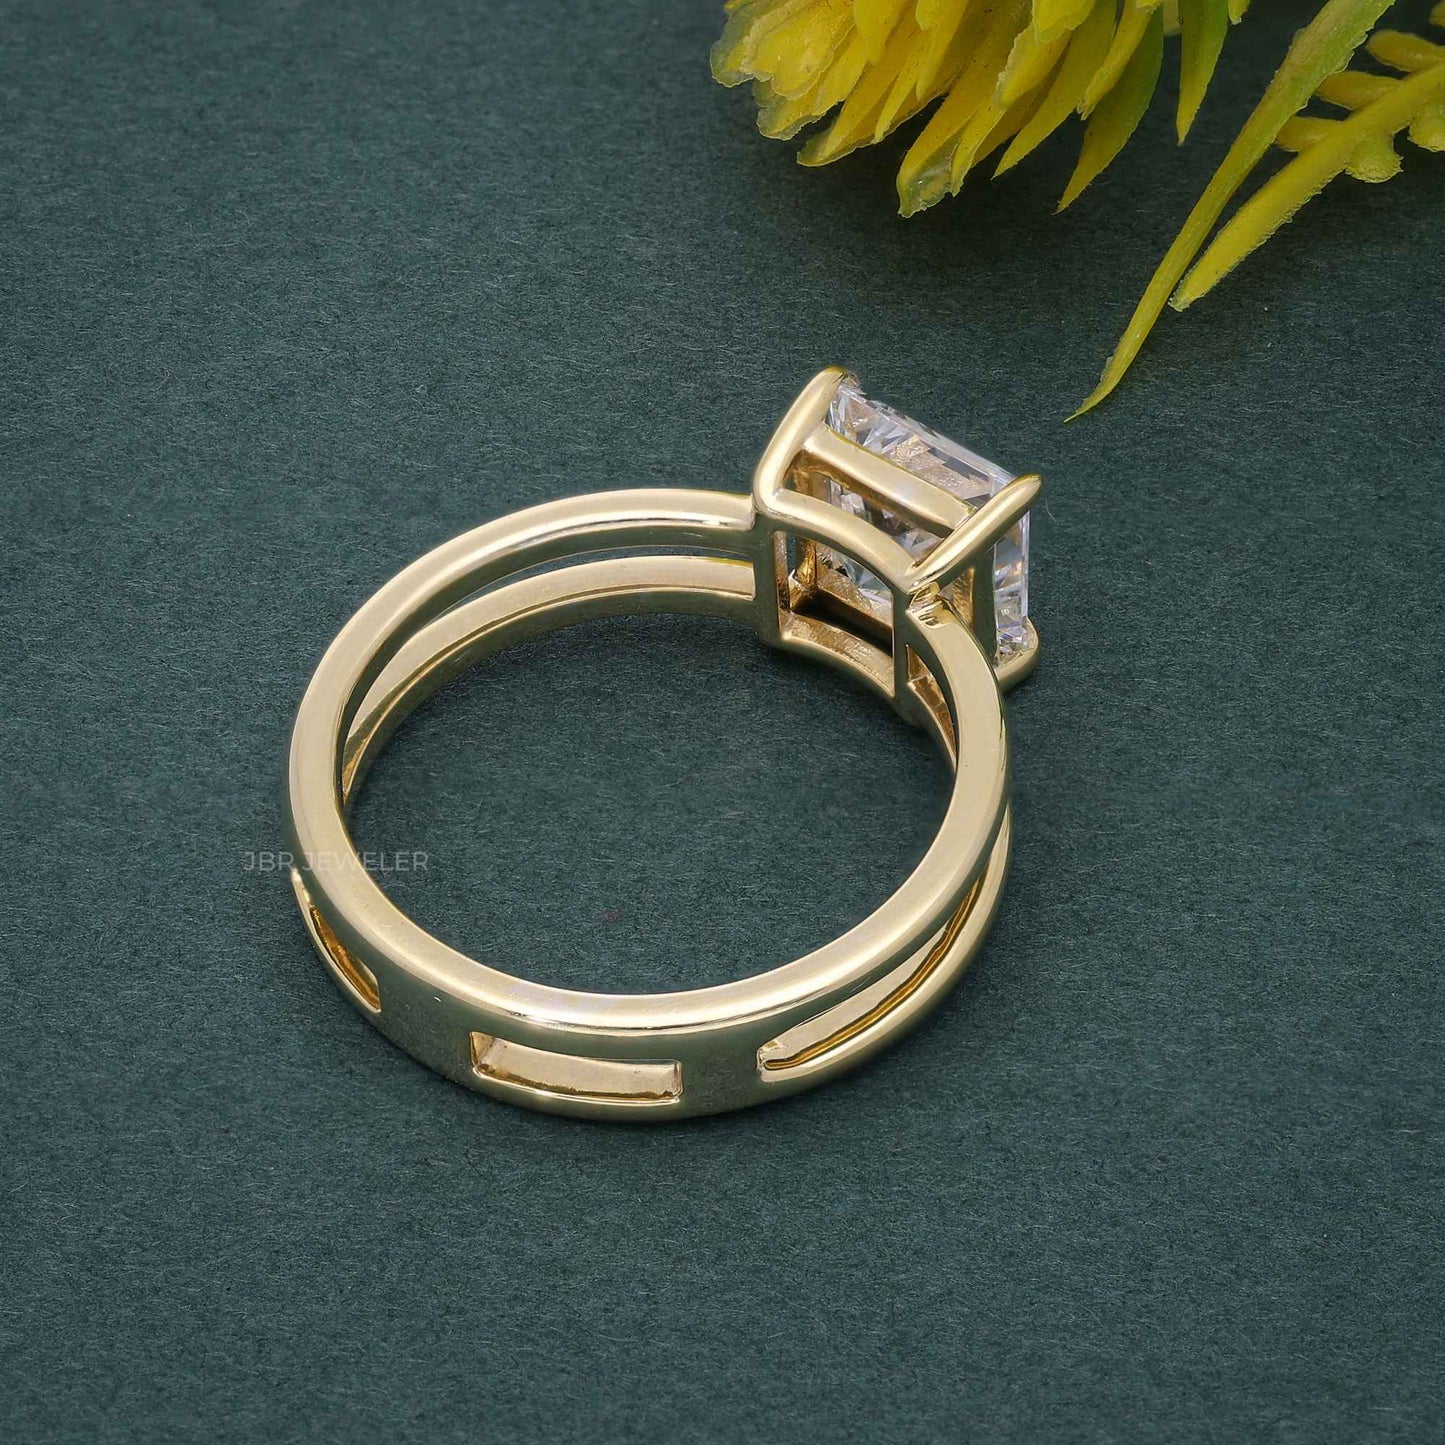 Double Band Princess Lab Grown Diamond Engagement Ring